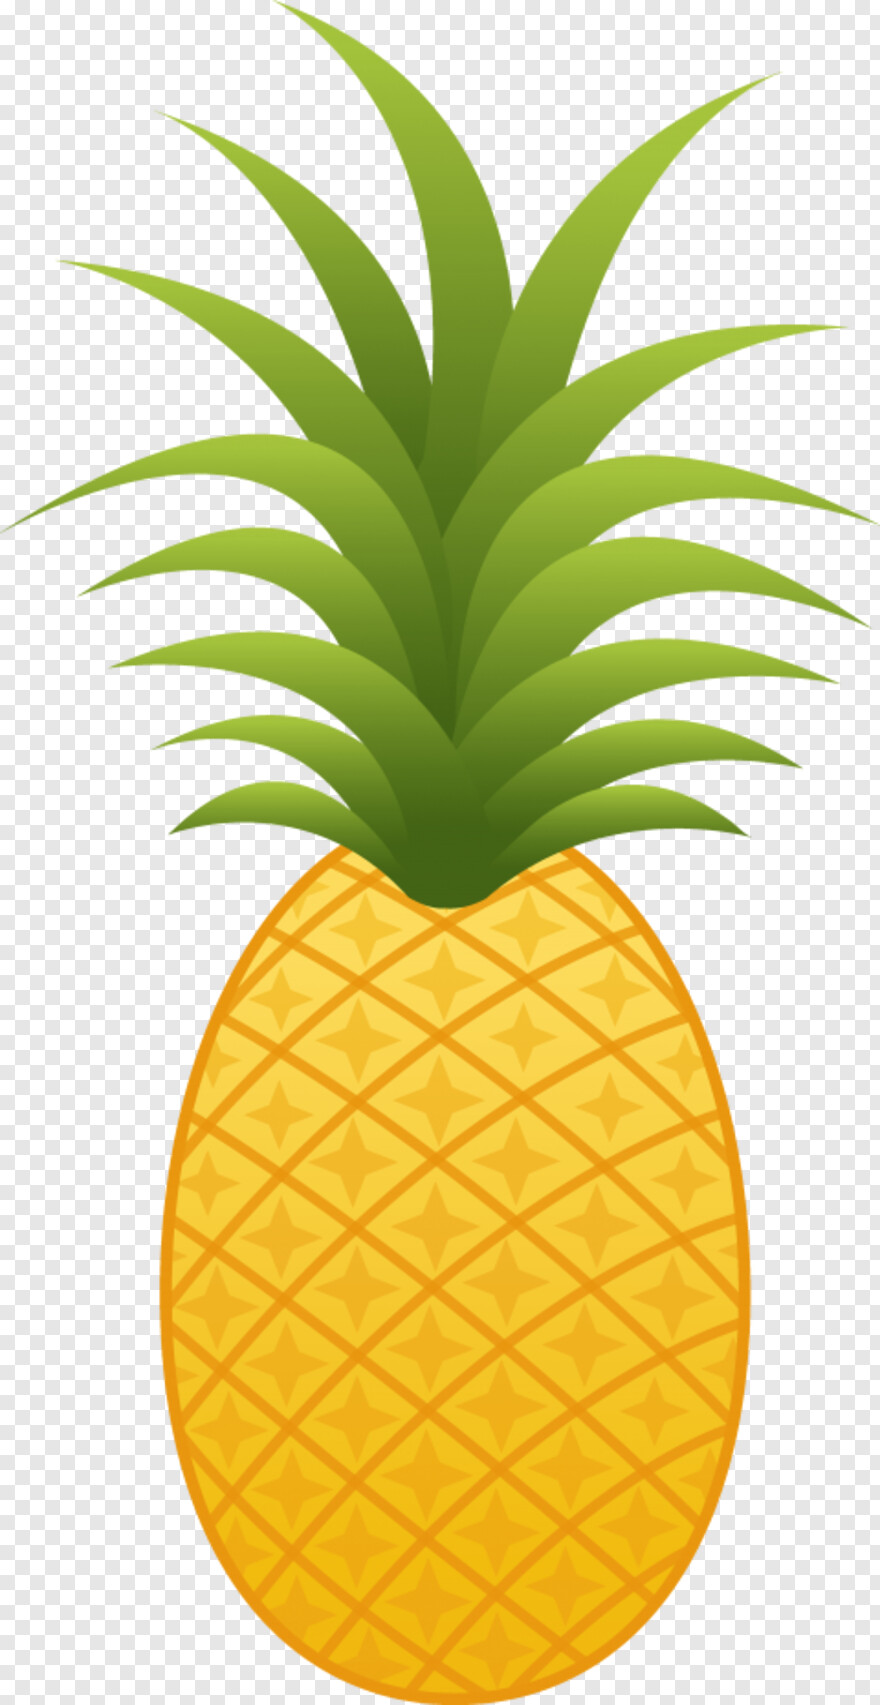 pineapple # 654205